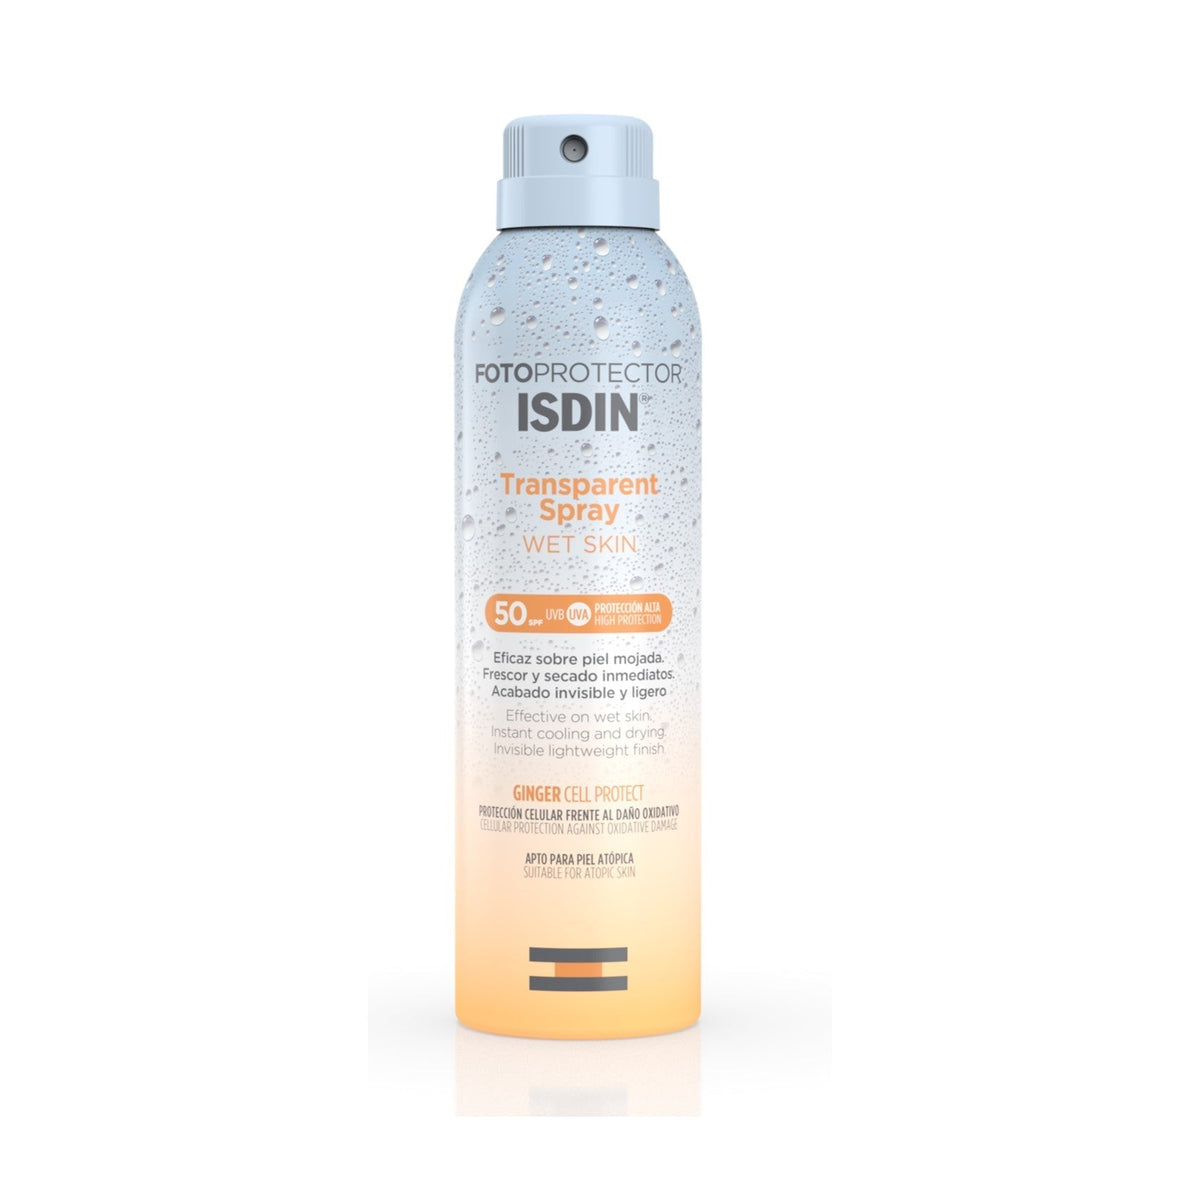 ISDIN Fotoprotector Transparent Sprayâ Wet Skin SPF50 250ml LillysPharmacy.ie